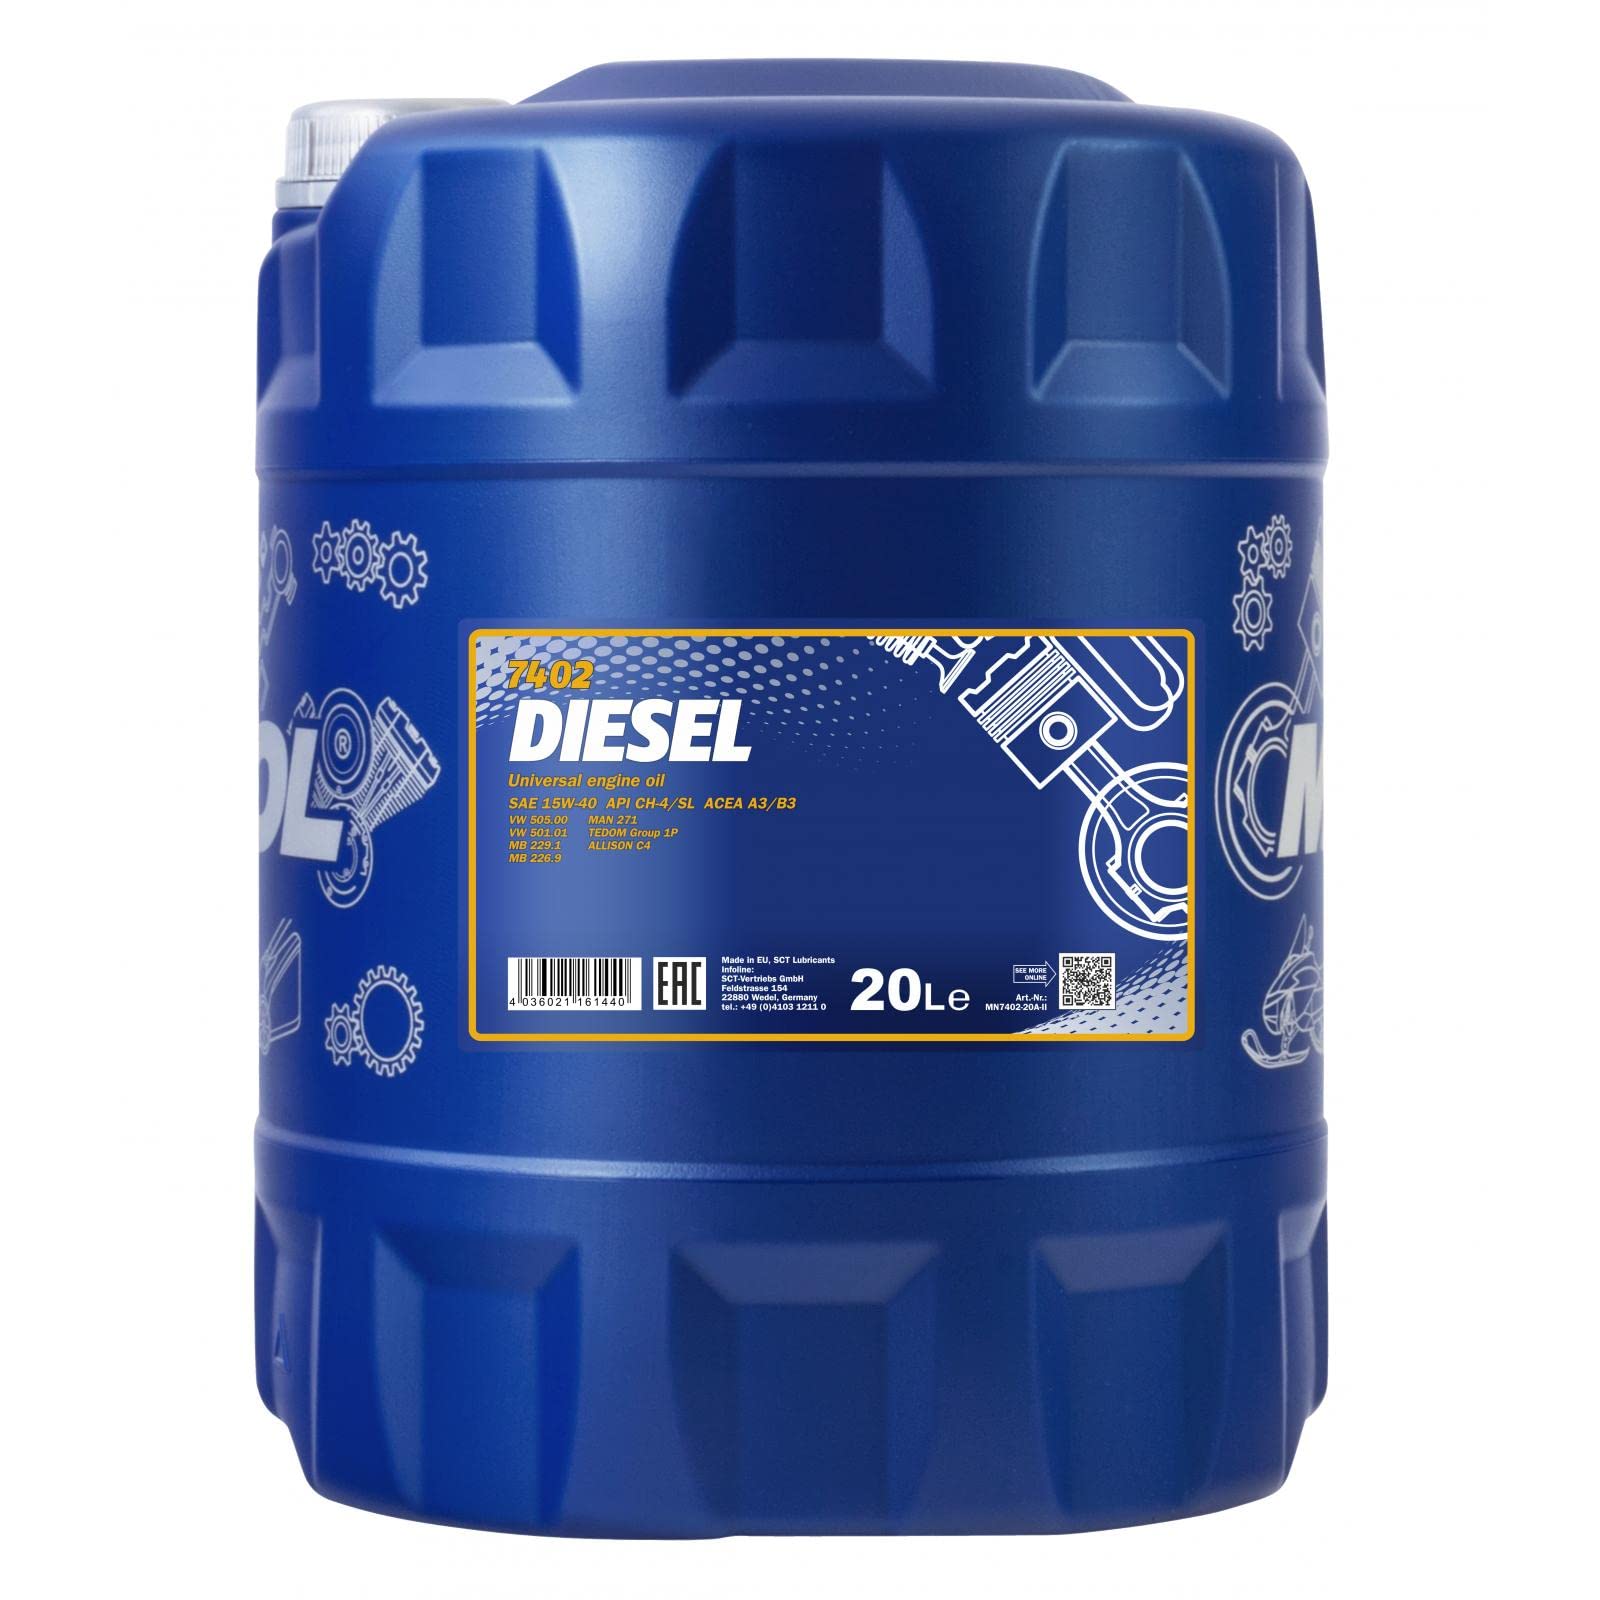 MANNOL Diesel 15W-40 API CG-4/CF-4/CF/SL Motorenöl, 20 Liter